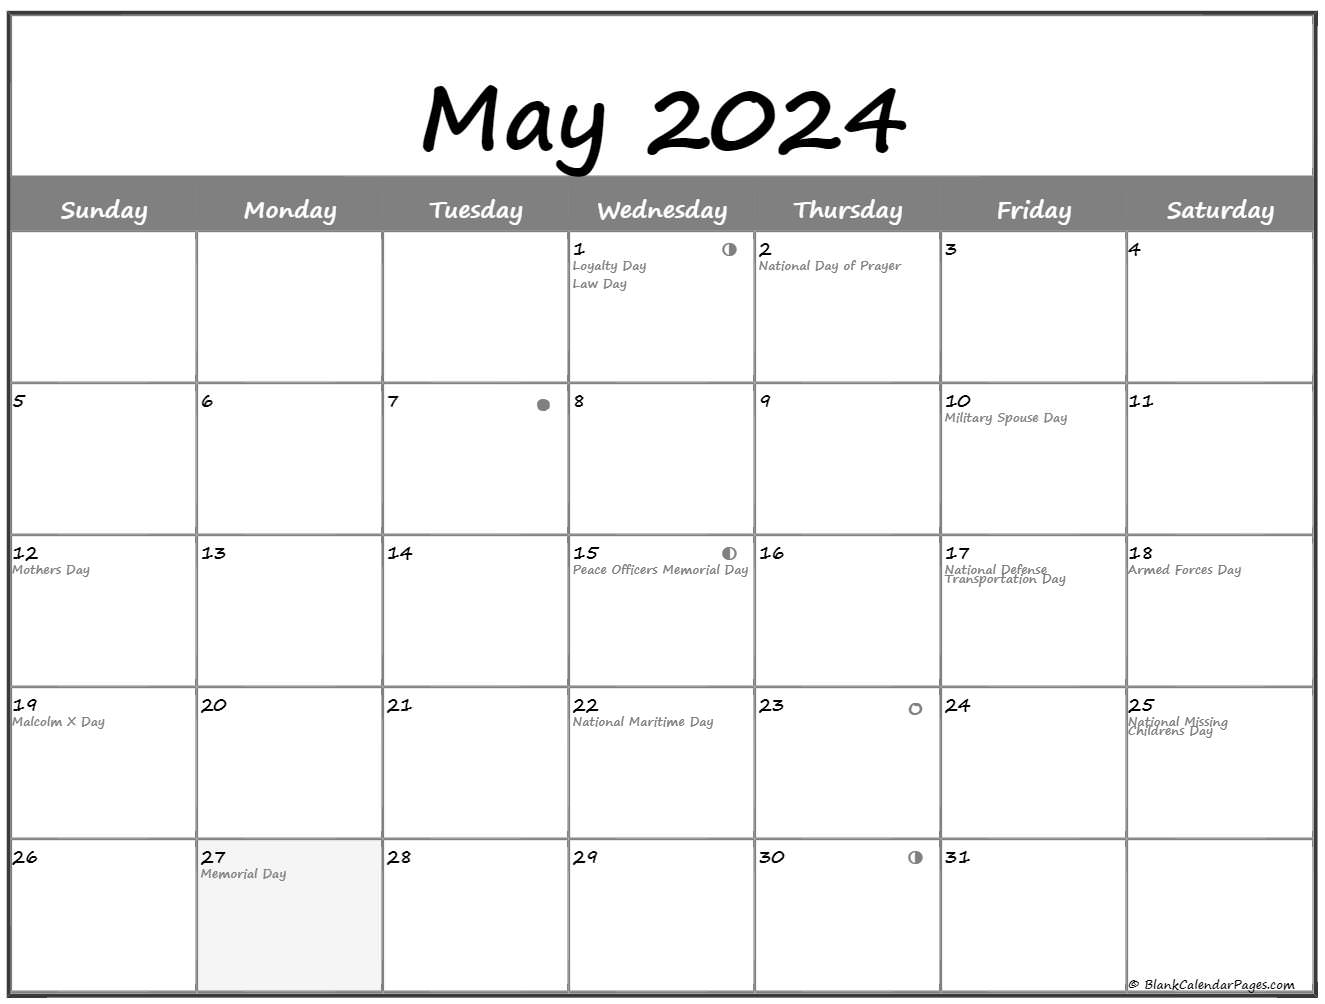 Homemade Gifts Made Easy Calendar July 2024 Alia Lilllie